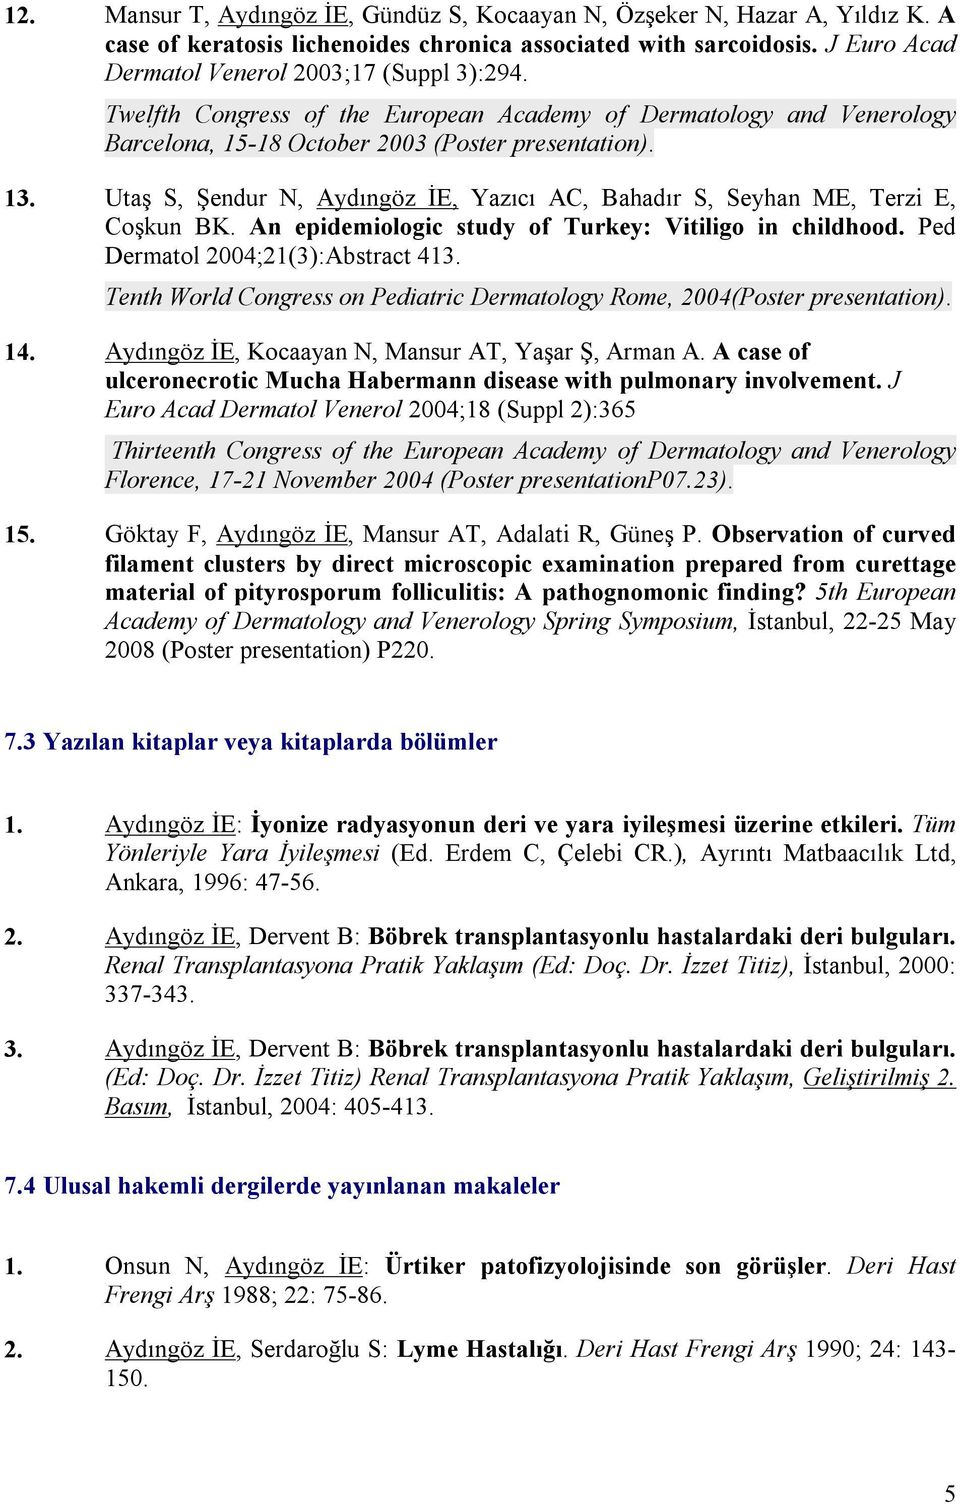 Utaş S, Şendur N, Aydıngöz İE, Yazıcı AC, Bahadır S, Seyhan ME, Terzi E, Coşkun BK. An epidemiologic study of Turkey: Vitiligo in childhood. Ped Dermatol 2004;21(3):Abstract 413.